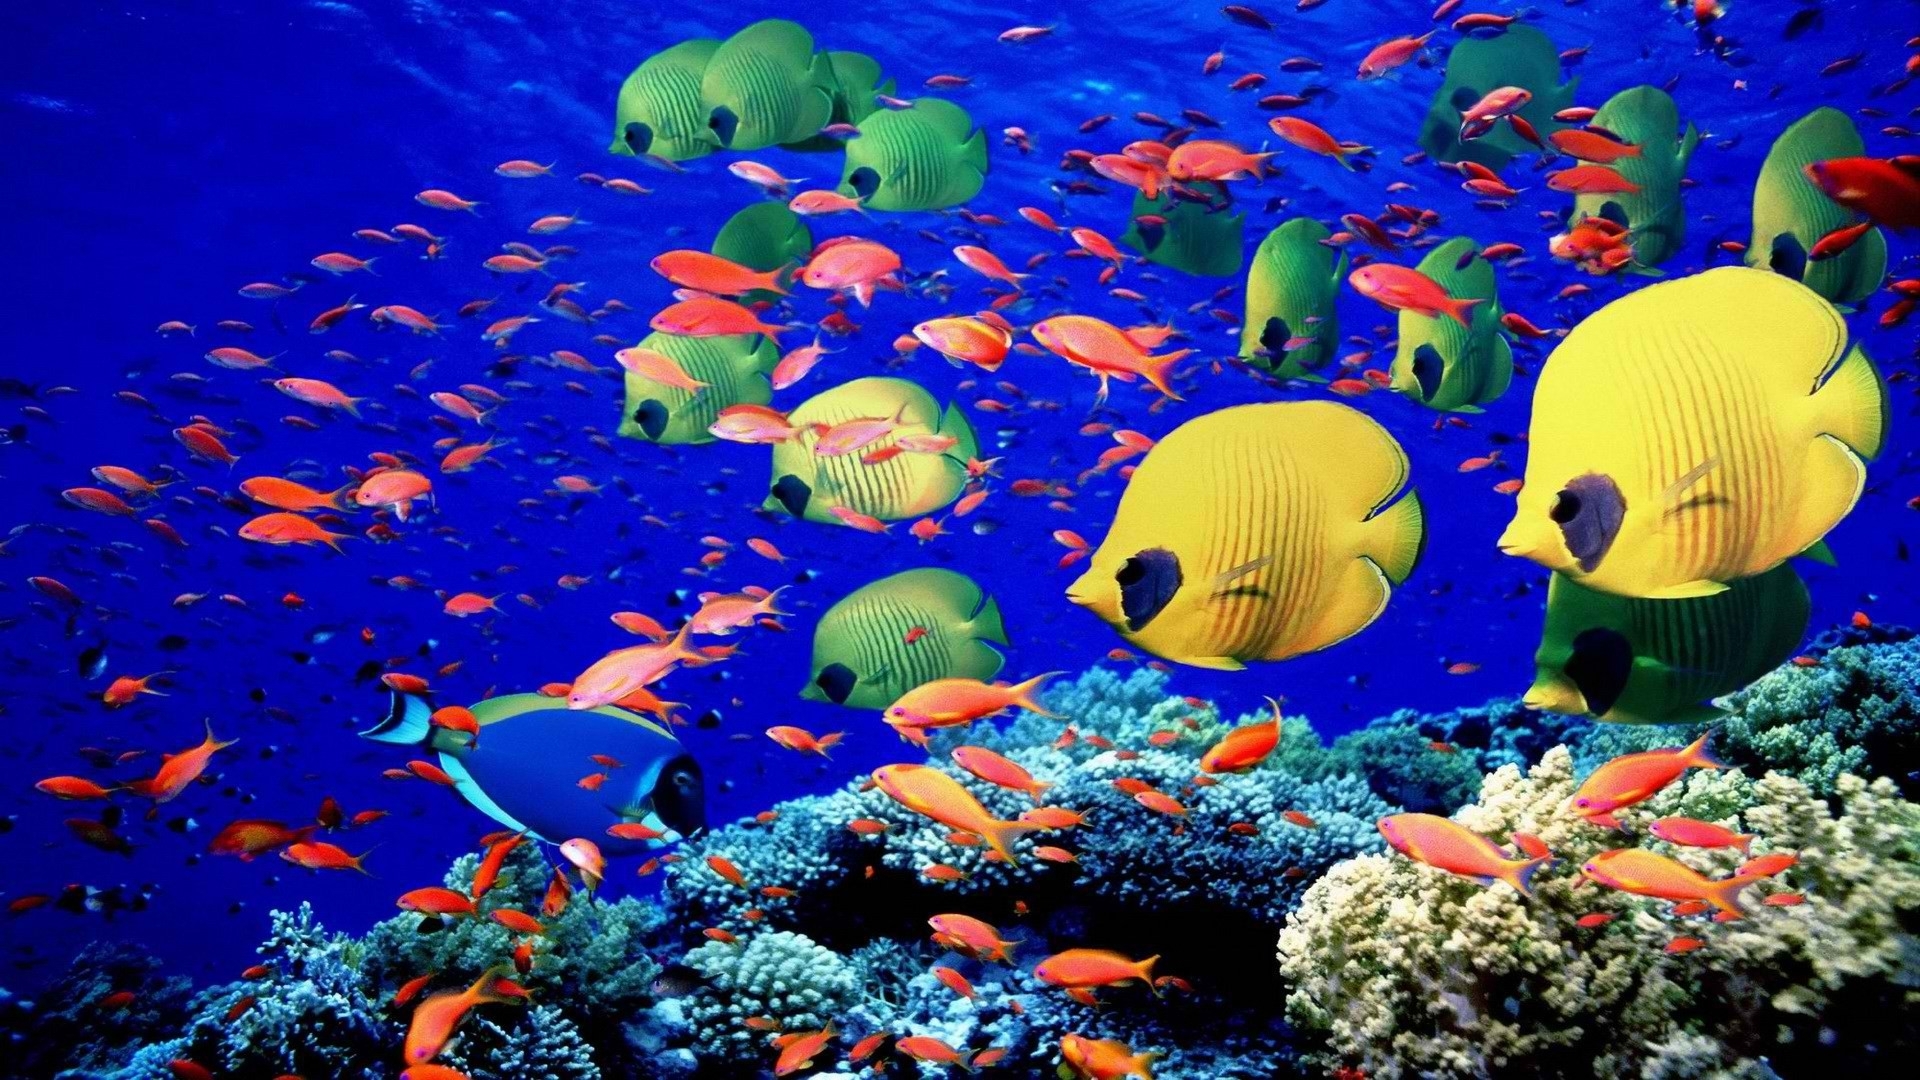  underwater swim coral reef colors bright sea life wallpaper background